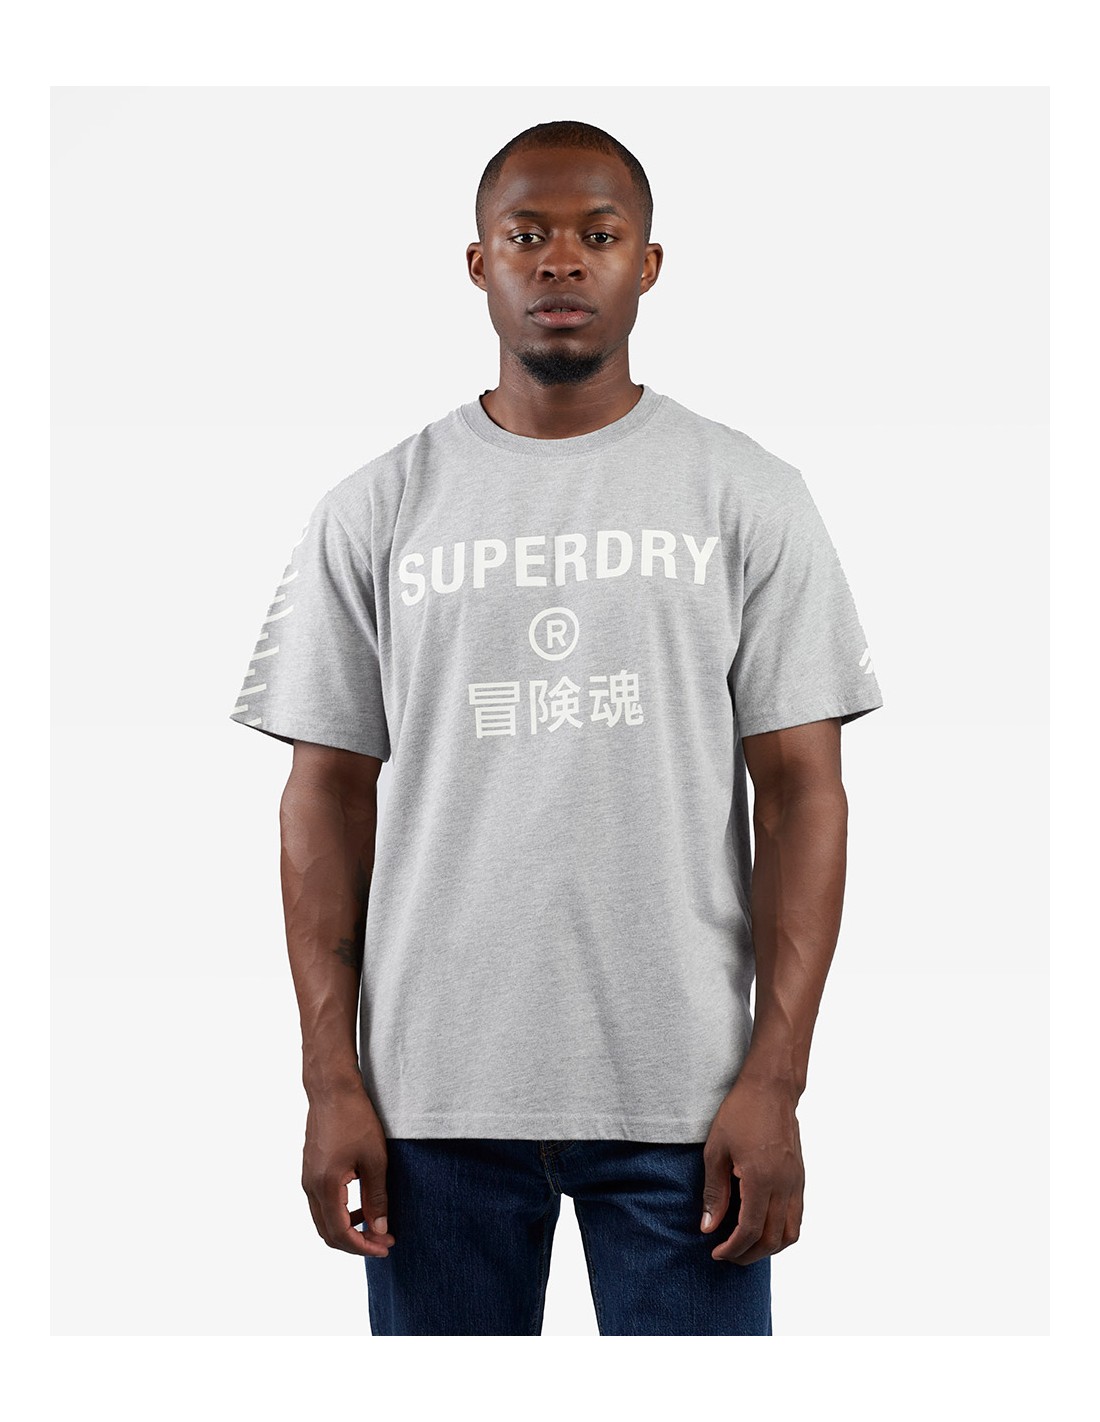 SUPERDRY Code Sport Tee Camiseta Core 